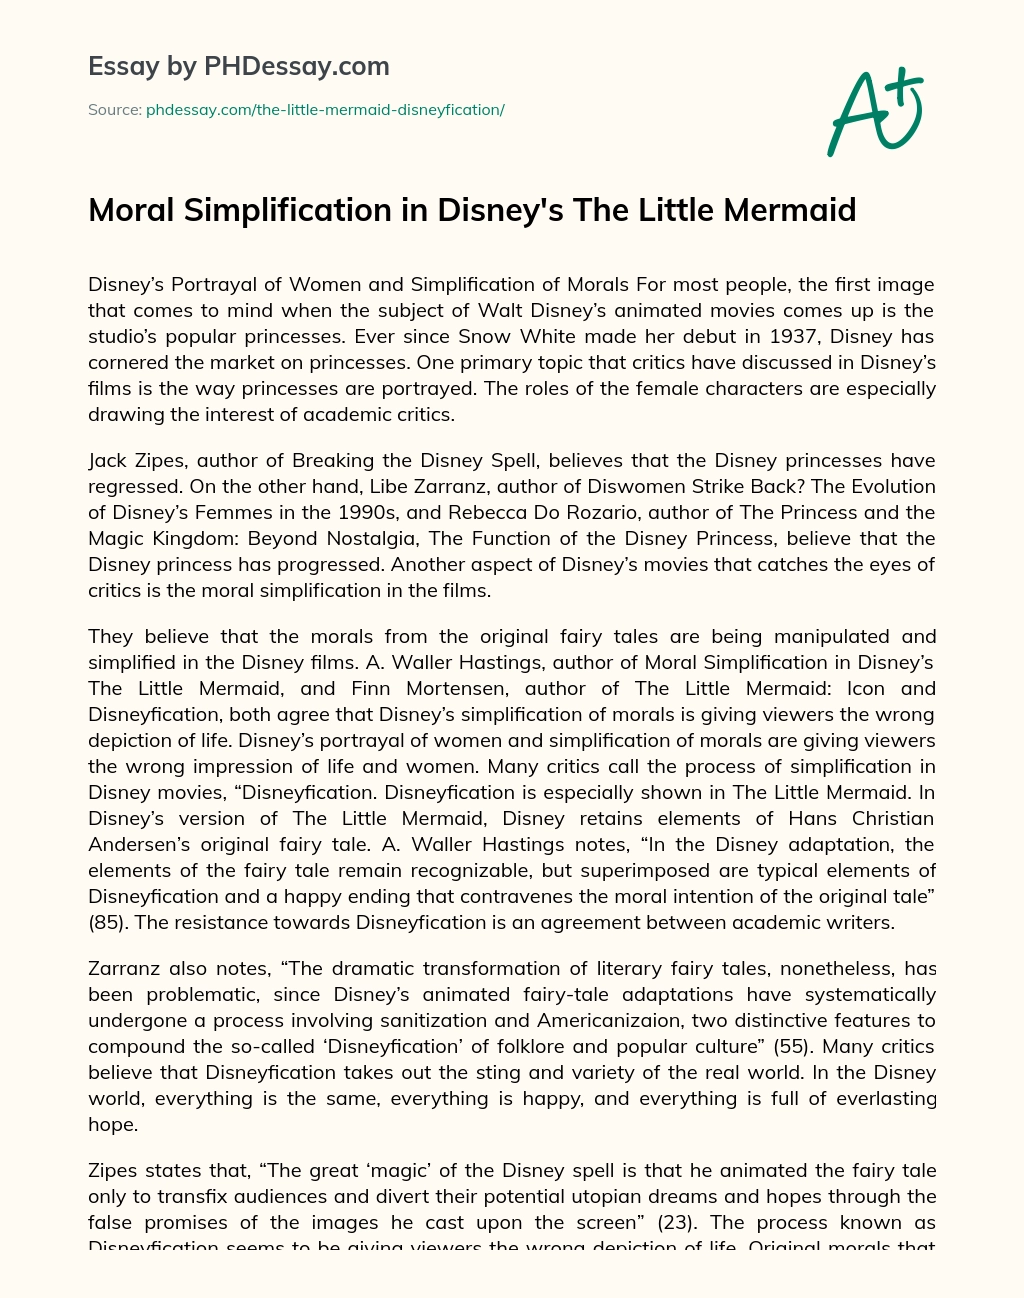 Moral Simplification in Disney’s The Little Mermaid essay